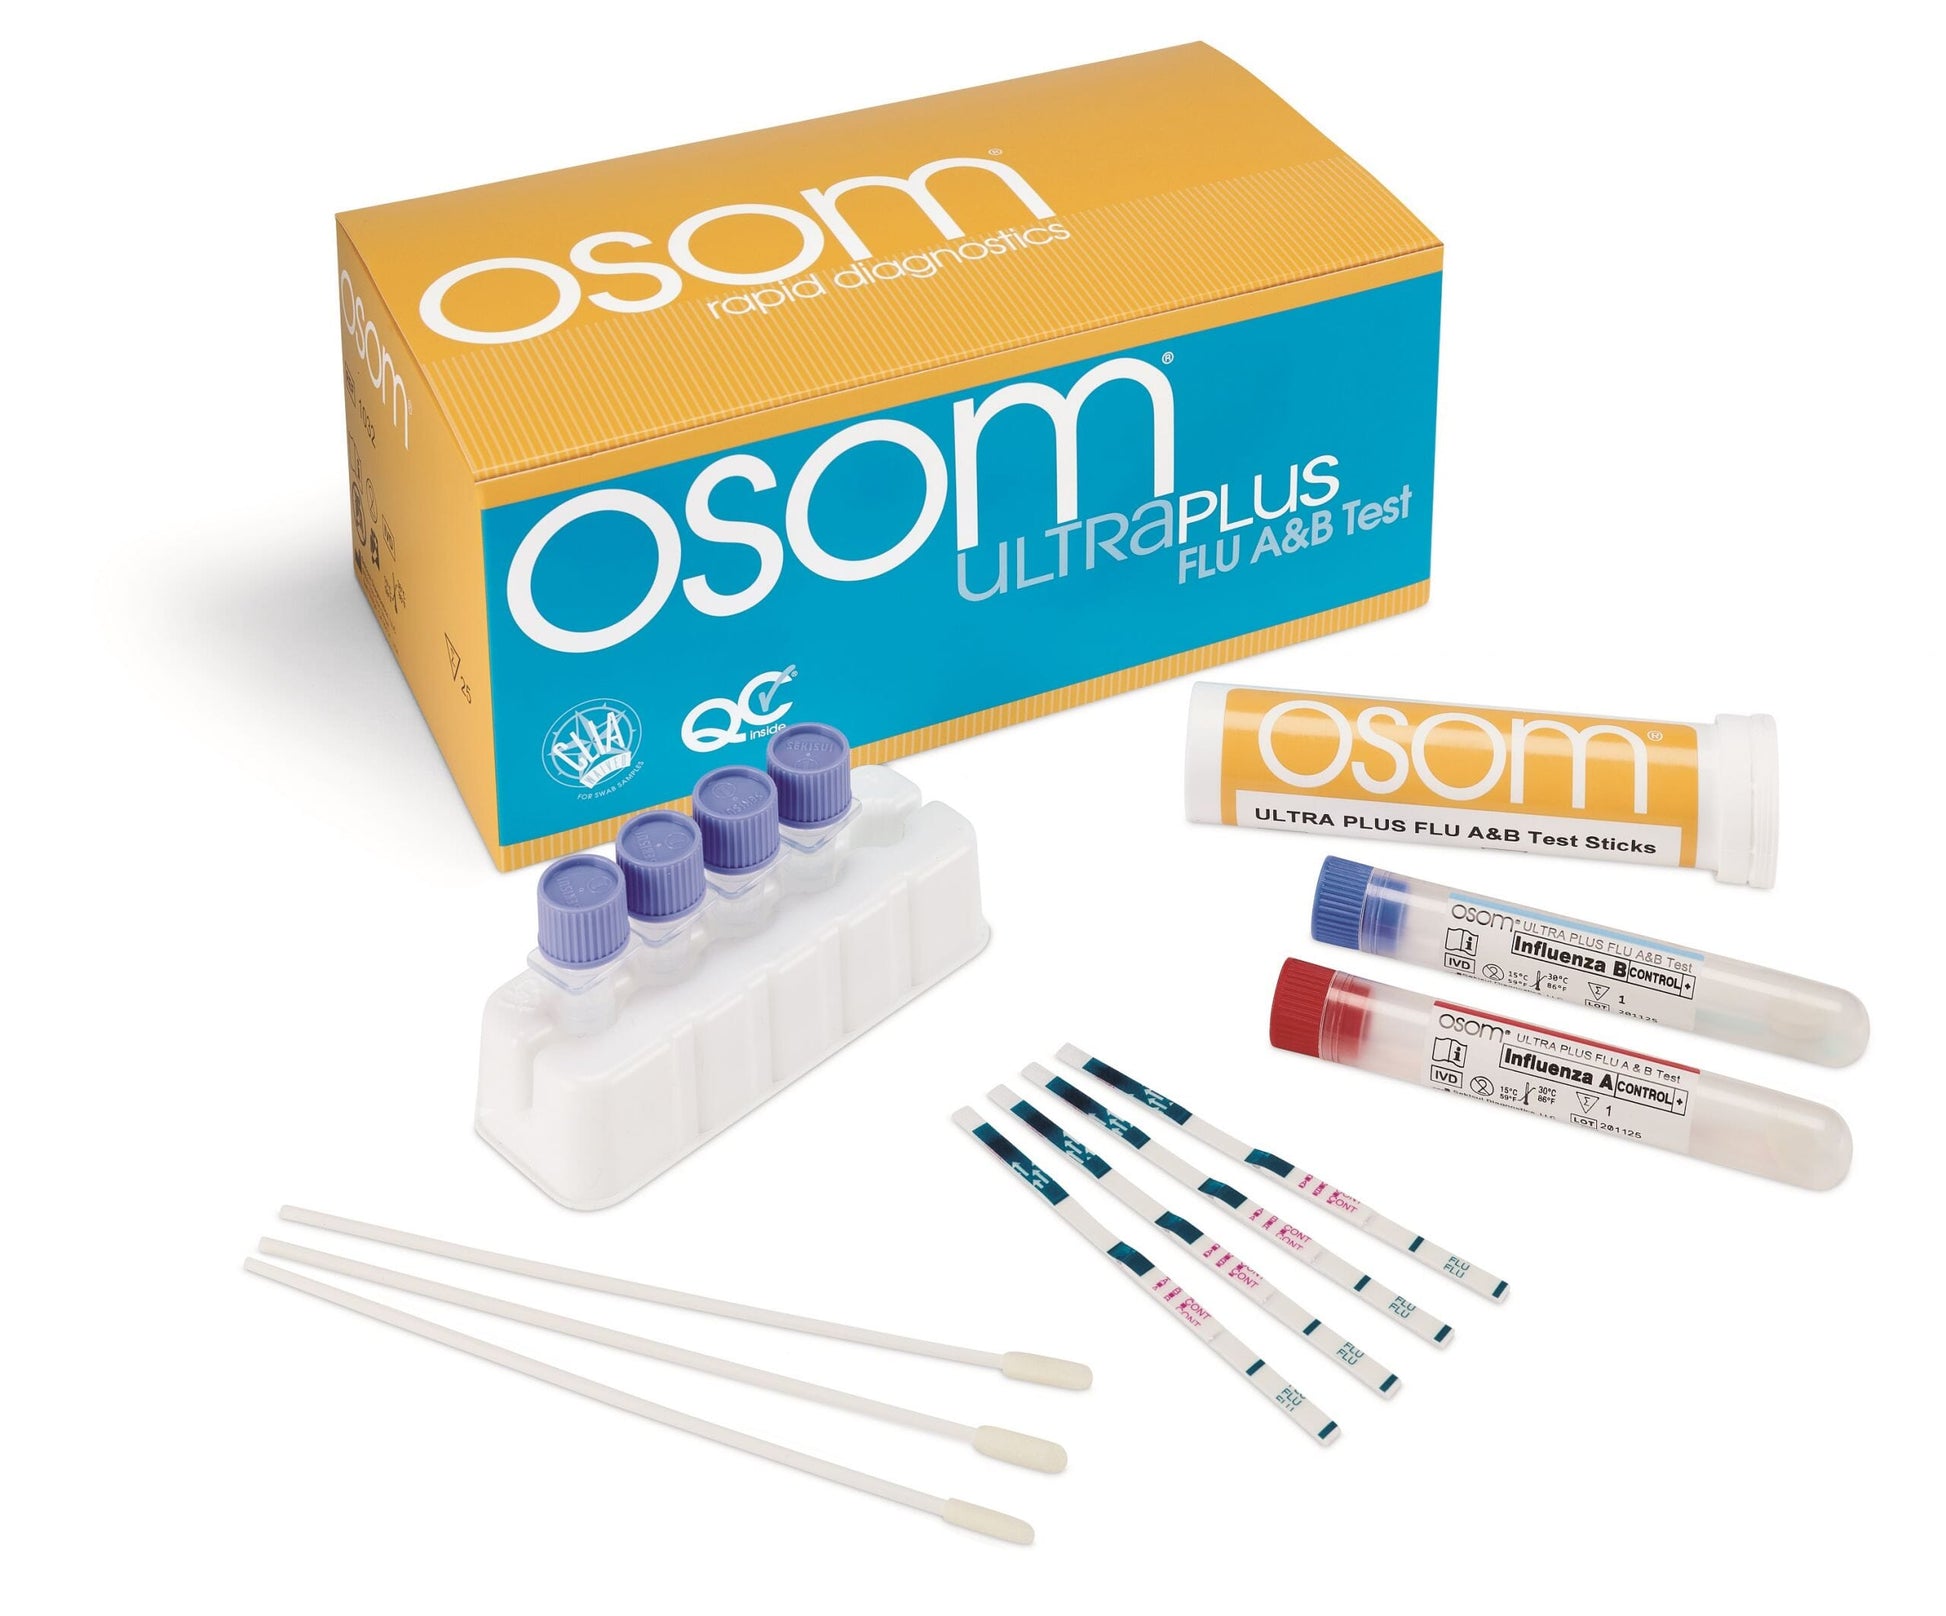 OSOM Ultra Plus Flu A & B Test